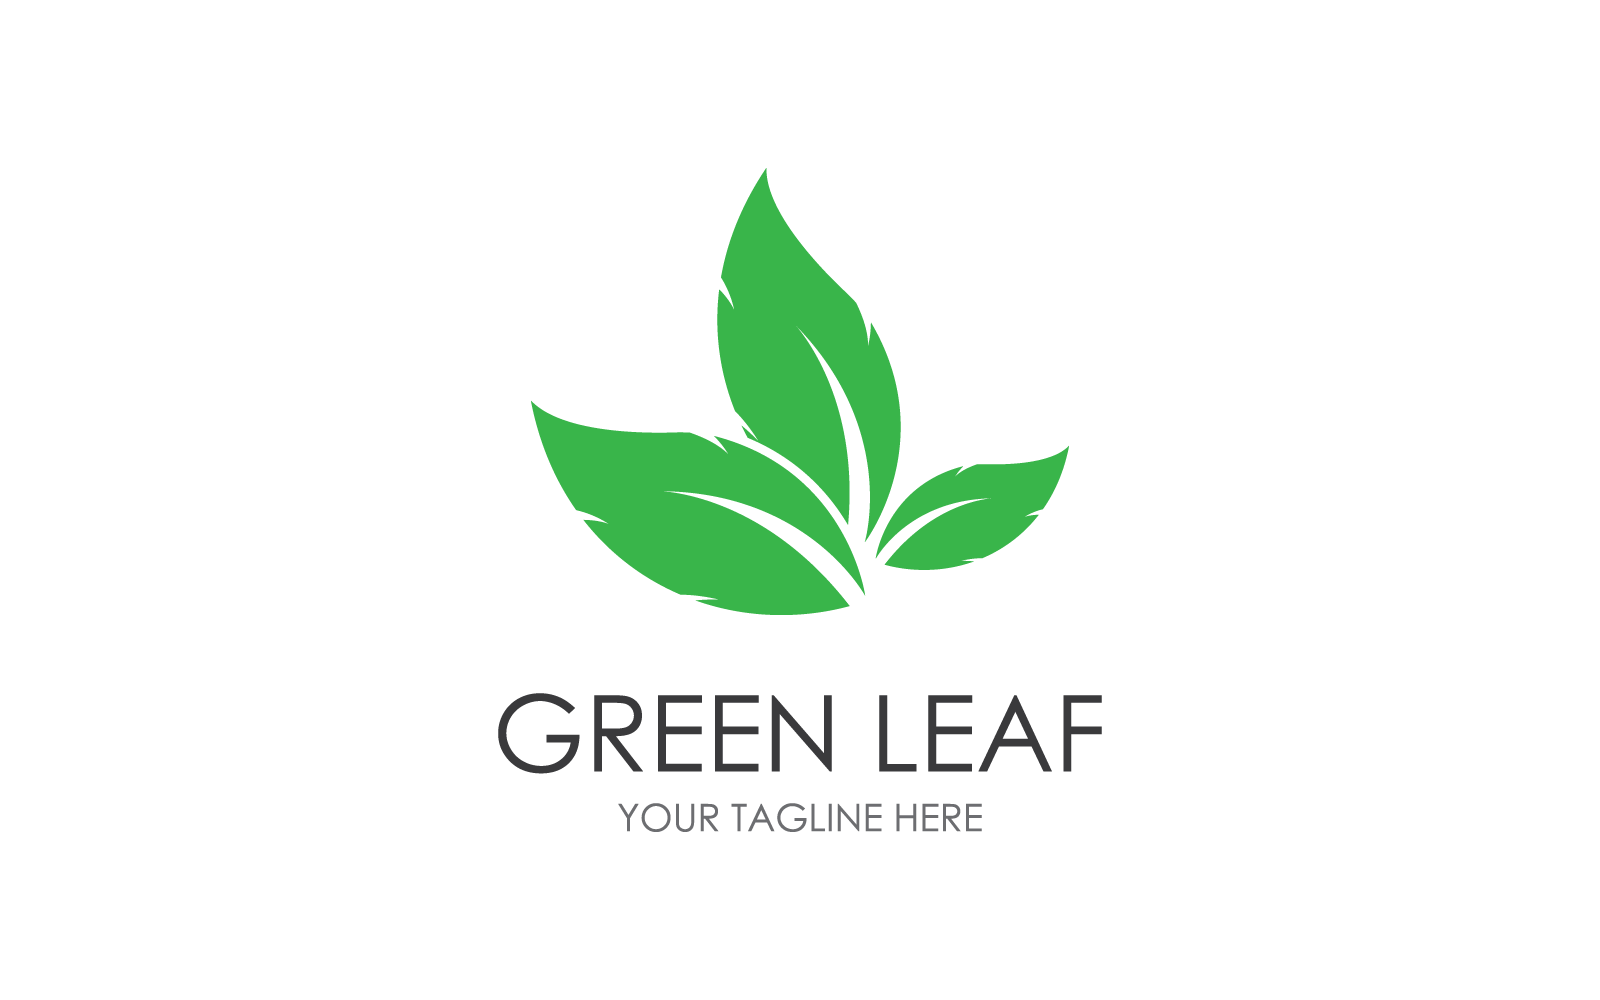 Green leaf logo icon vector design nature